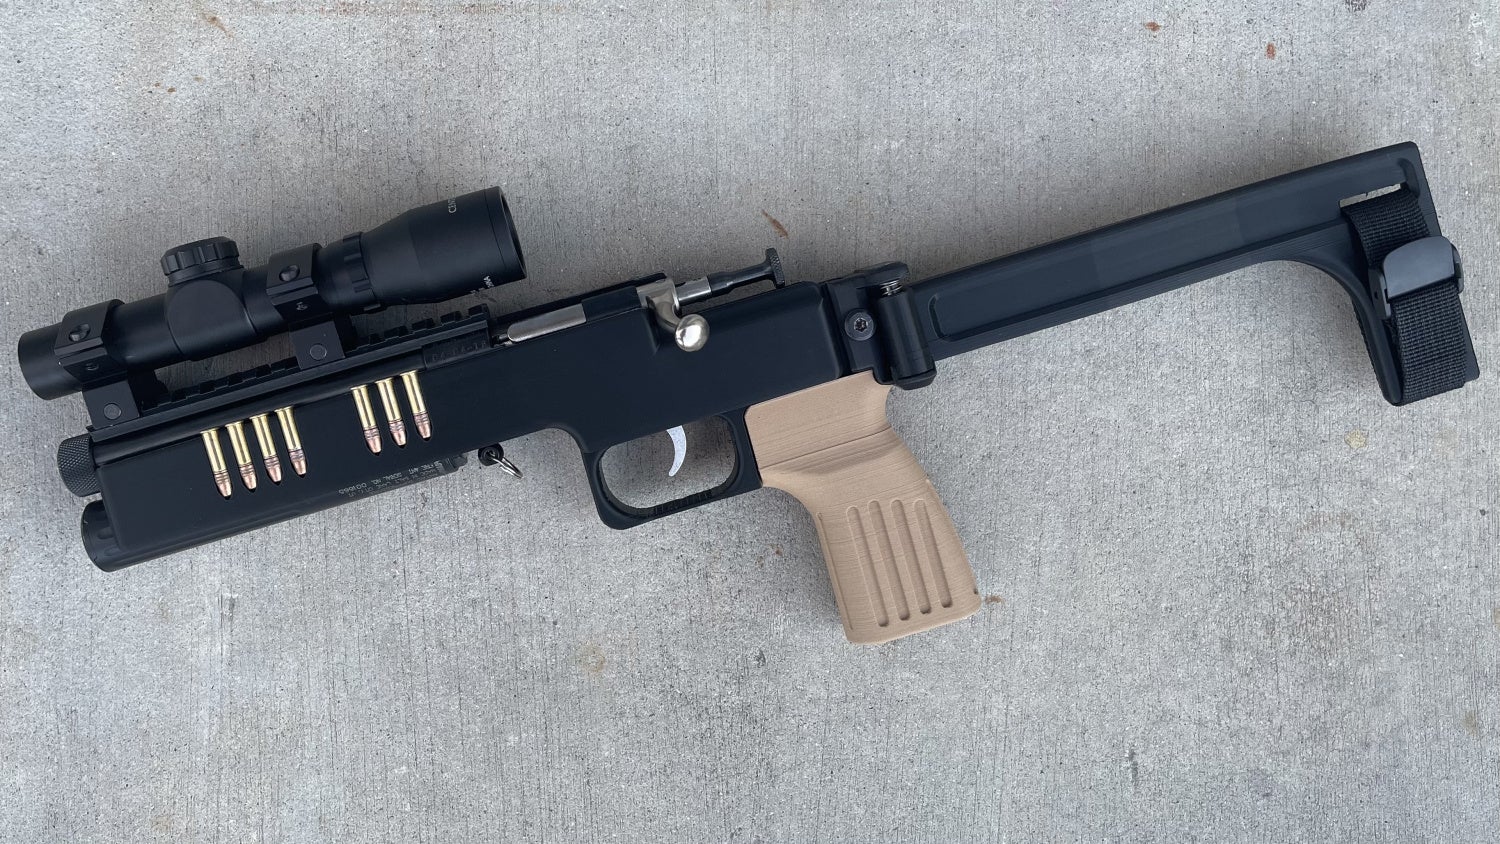 3D printed survival gun chassis